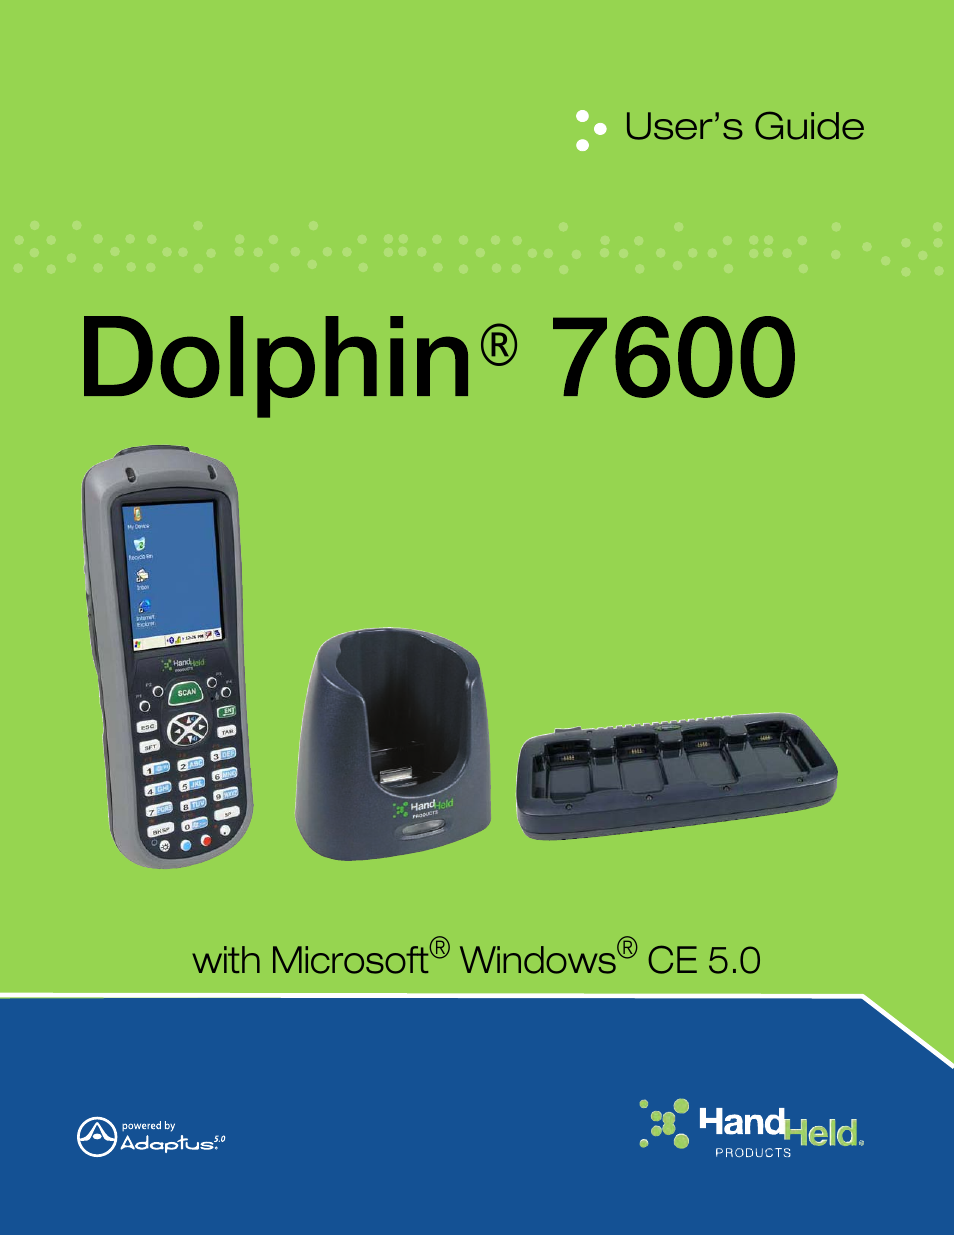 DOLPHIN 7600